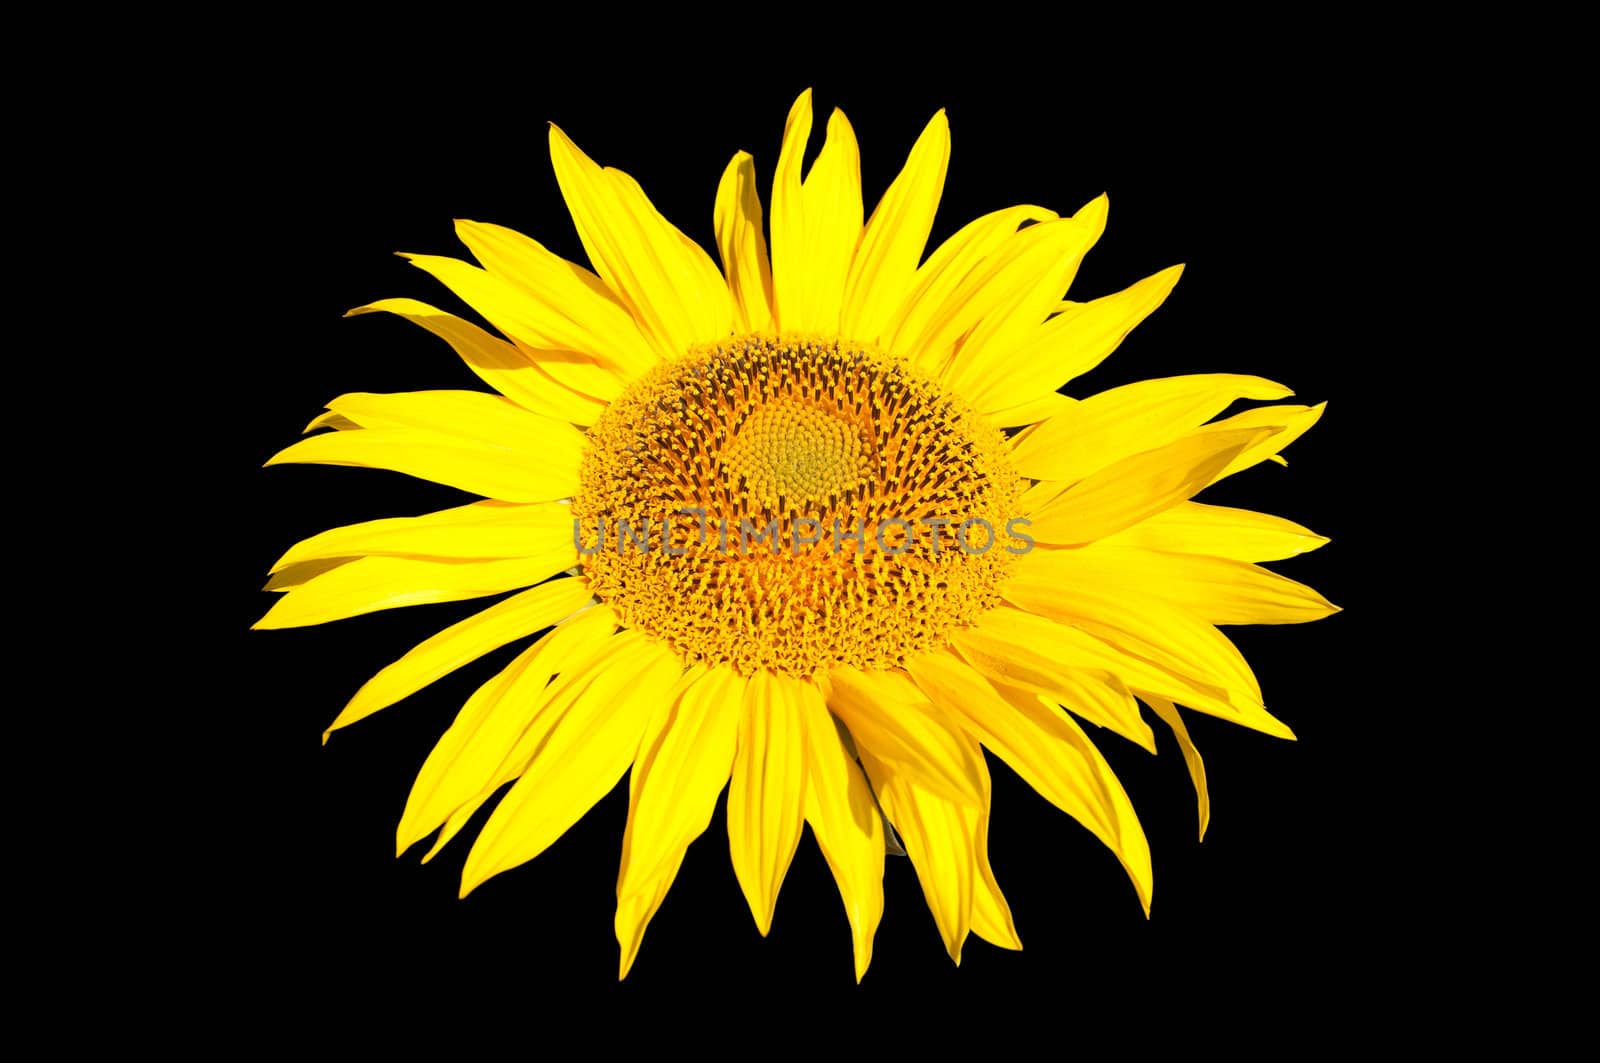 Sunflower isolated on black